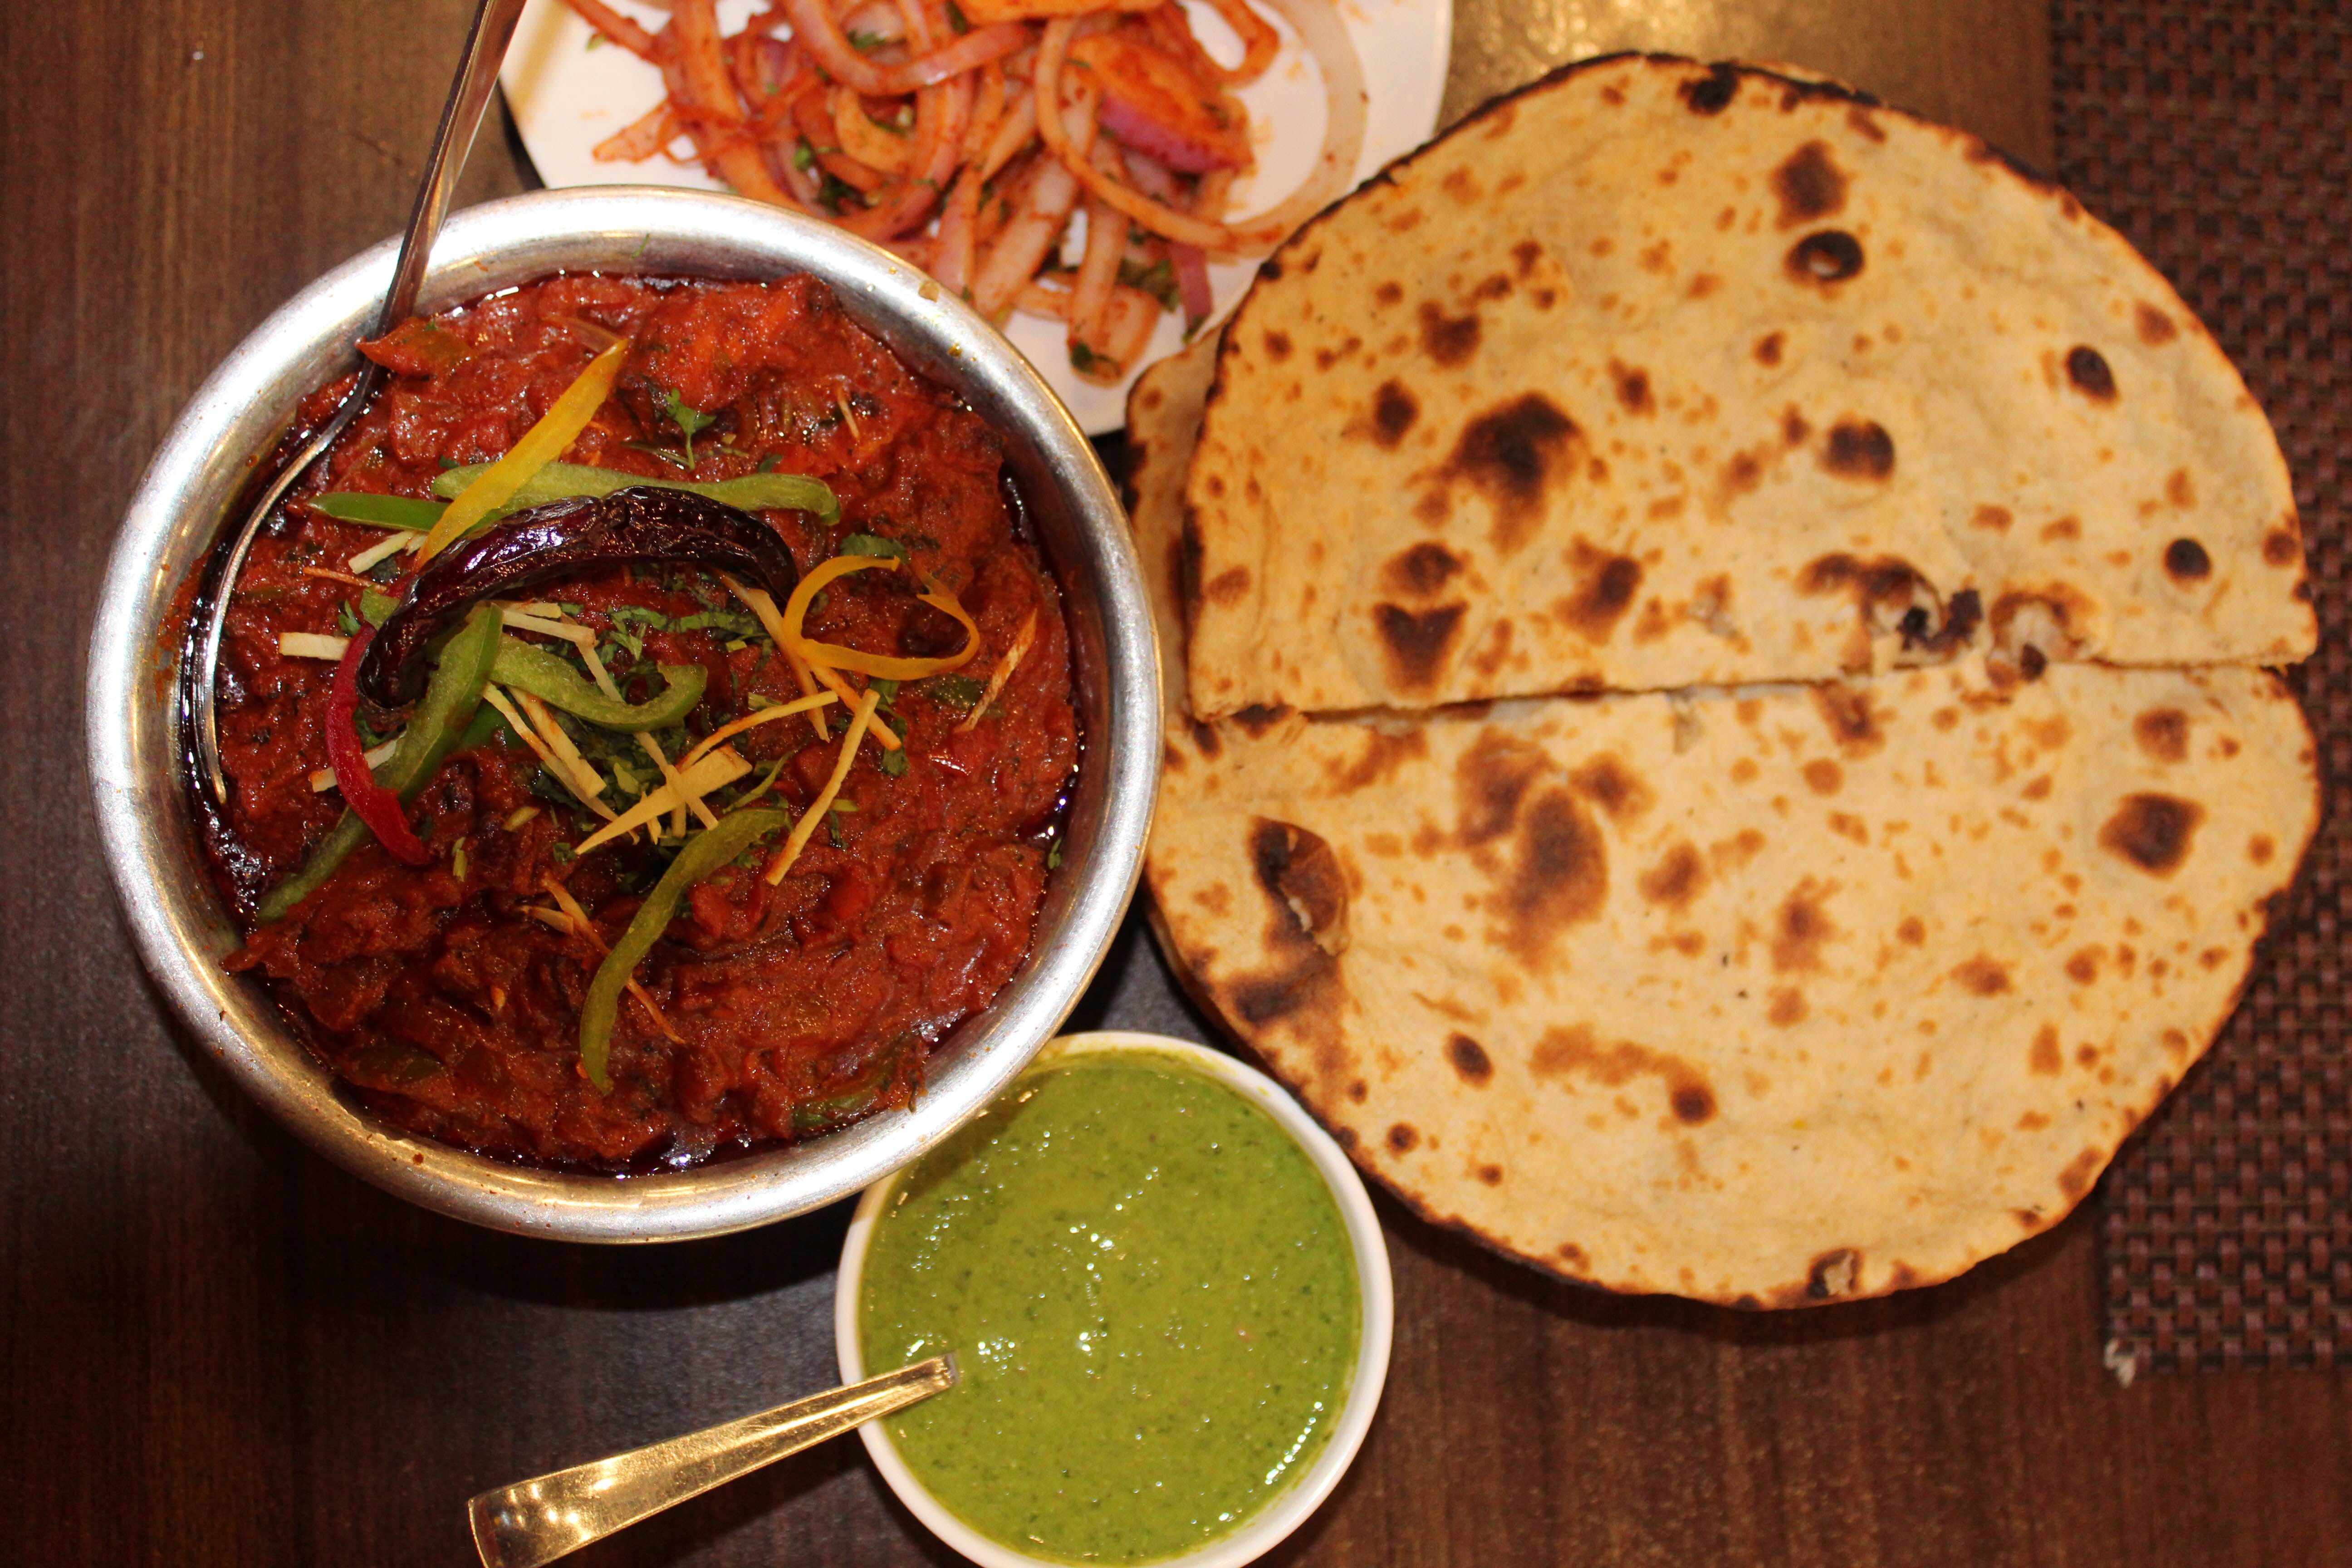 Dish,Food,Cuisine,Ingredient,Naan,Roti,Punjabi cuisine,Produce,Flatbread,Chapati